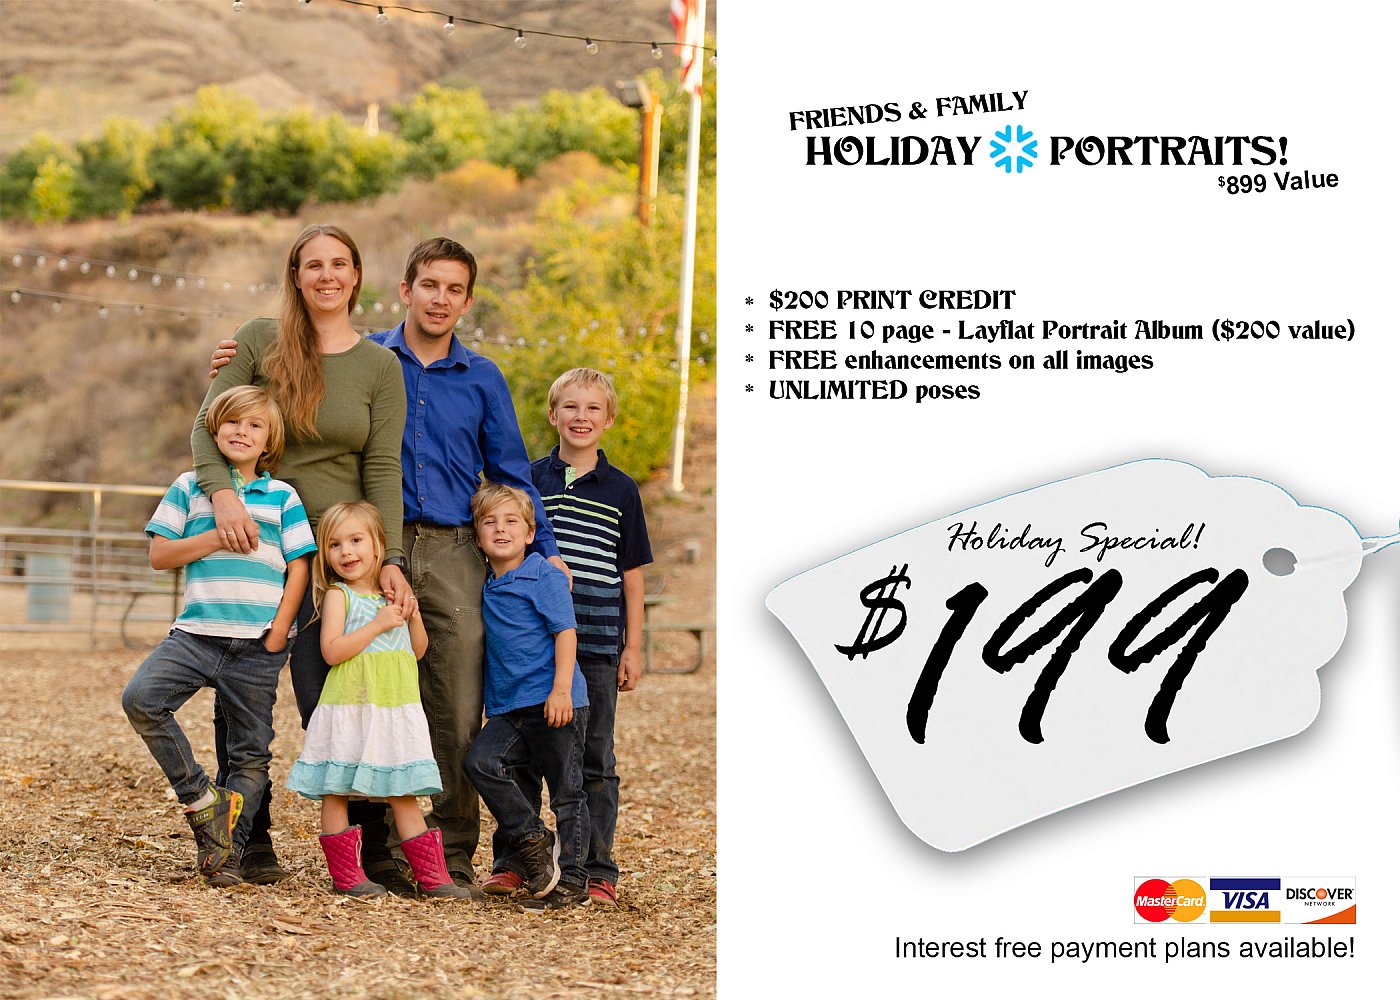 $100 family portrait savings expires soon!